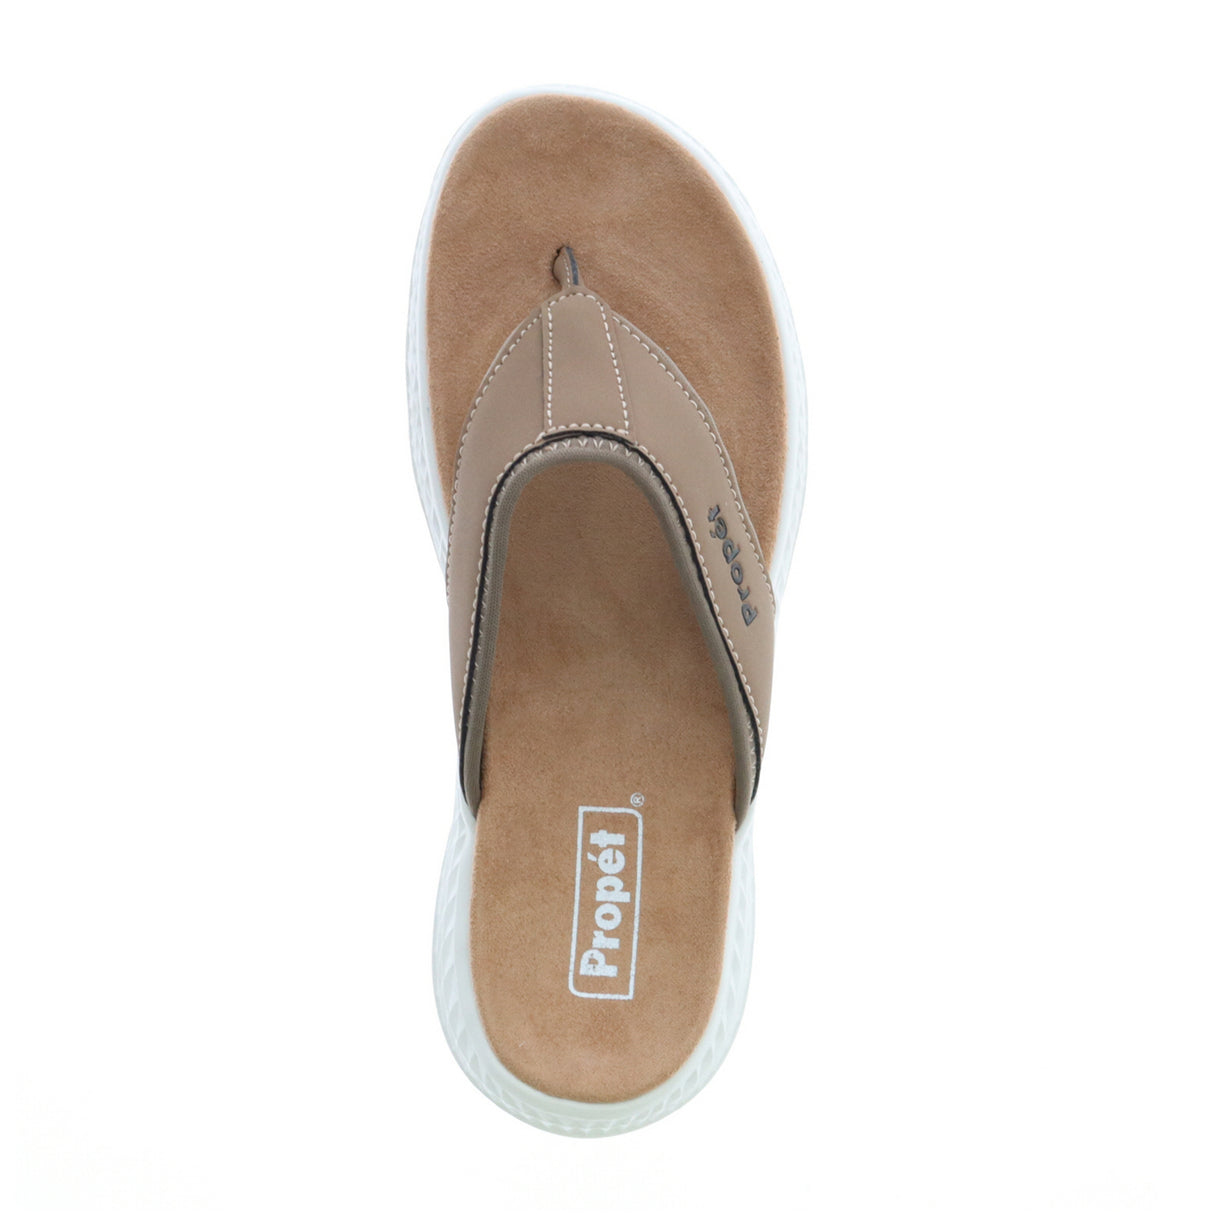 Propet TravelActiv FT (Women) - Tan Sandal - Thong - The Heel Shoe Fitters